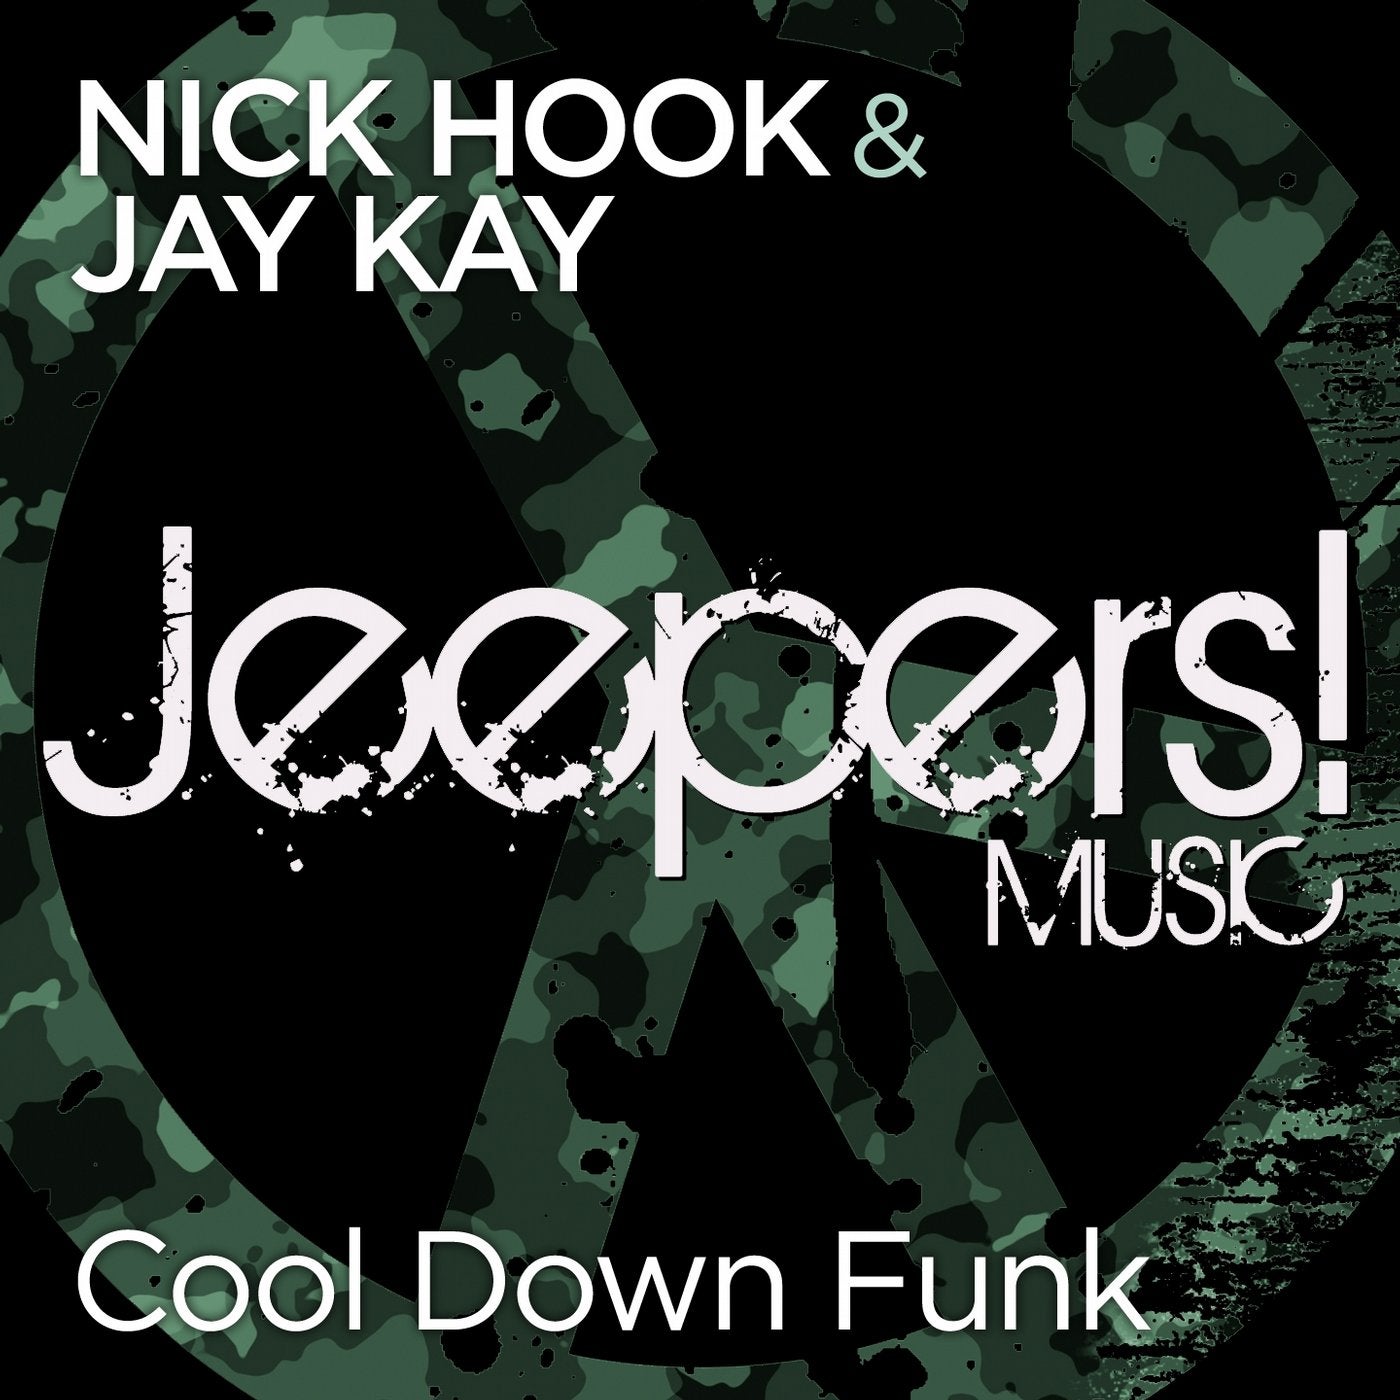 Джей Hook. Jay Hooks - Jay Hooks. Funk down. Nick Music. Up down funk